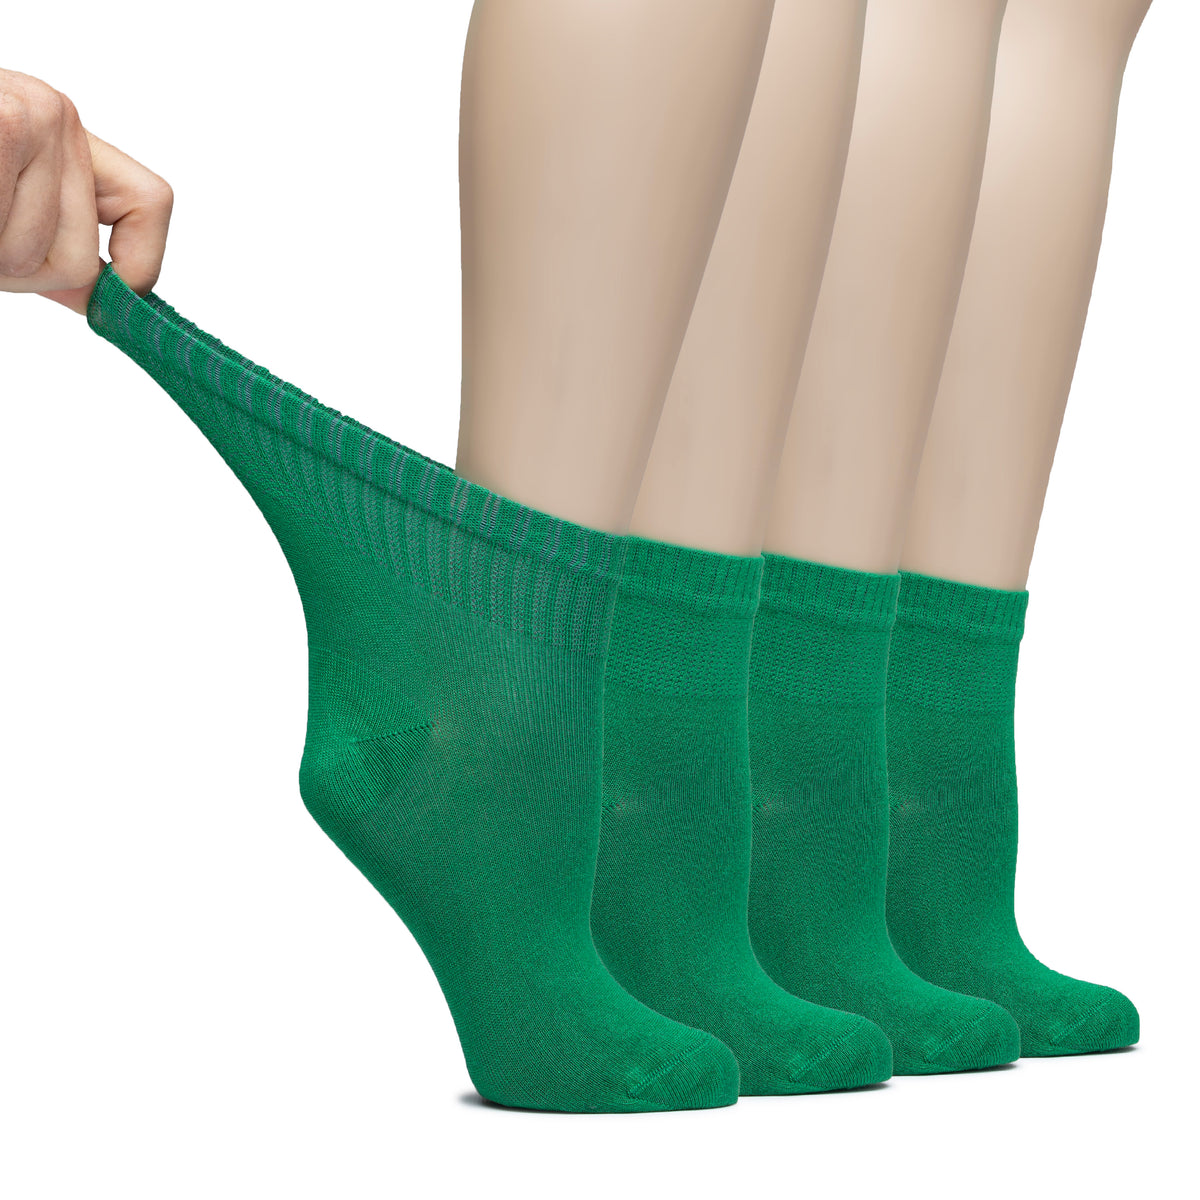 Hugh Ugoli Lightweight Women's Diabetic Ankle Socks Bamboo Thin Socks Seamless Toe and Non-Binding Top, 4 Pairs, , Shoe Size: 6-9/10-12 | Shoe Size: 10-12 | Christmas Green